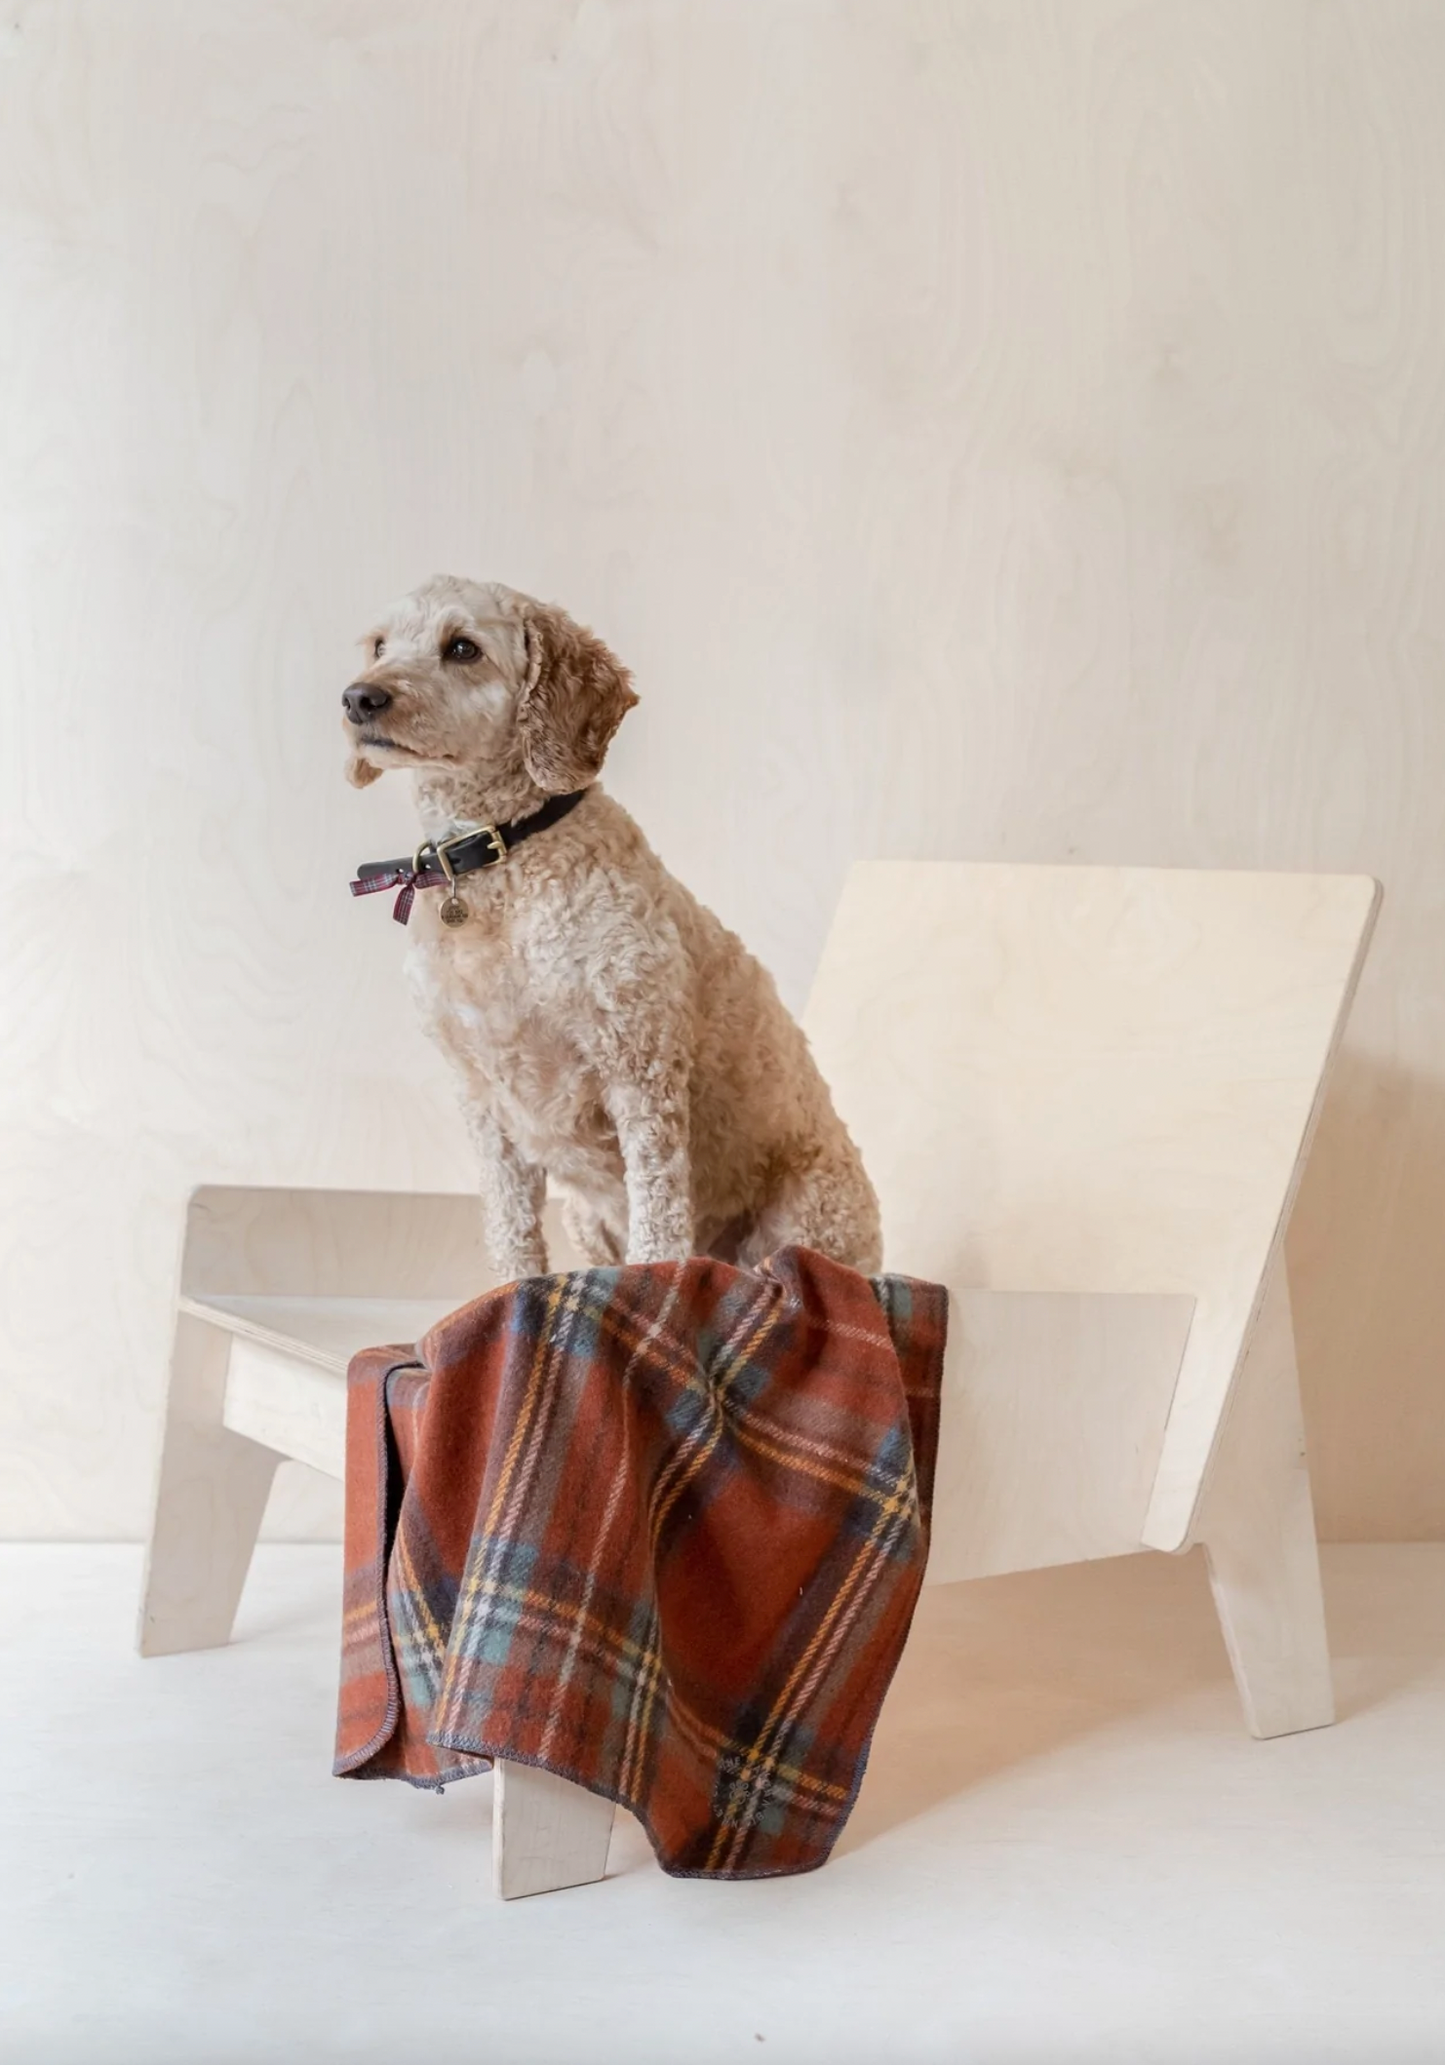 Recycled Wool Small Pet Blanket in Stewart Royal Antique Tartan